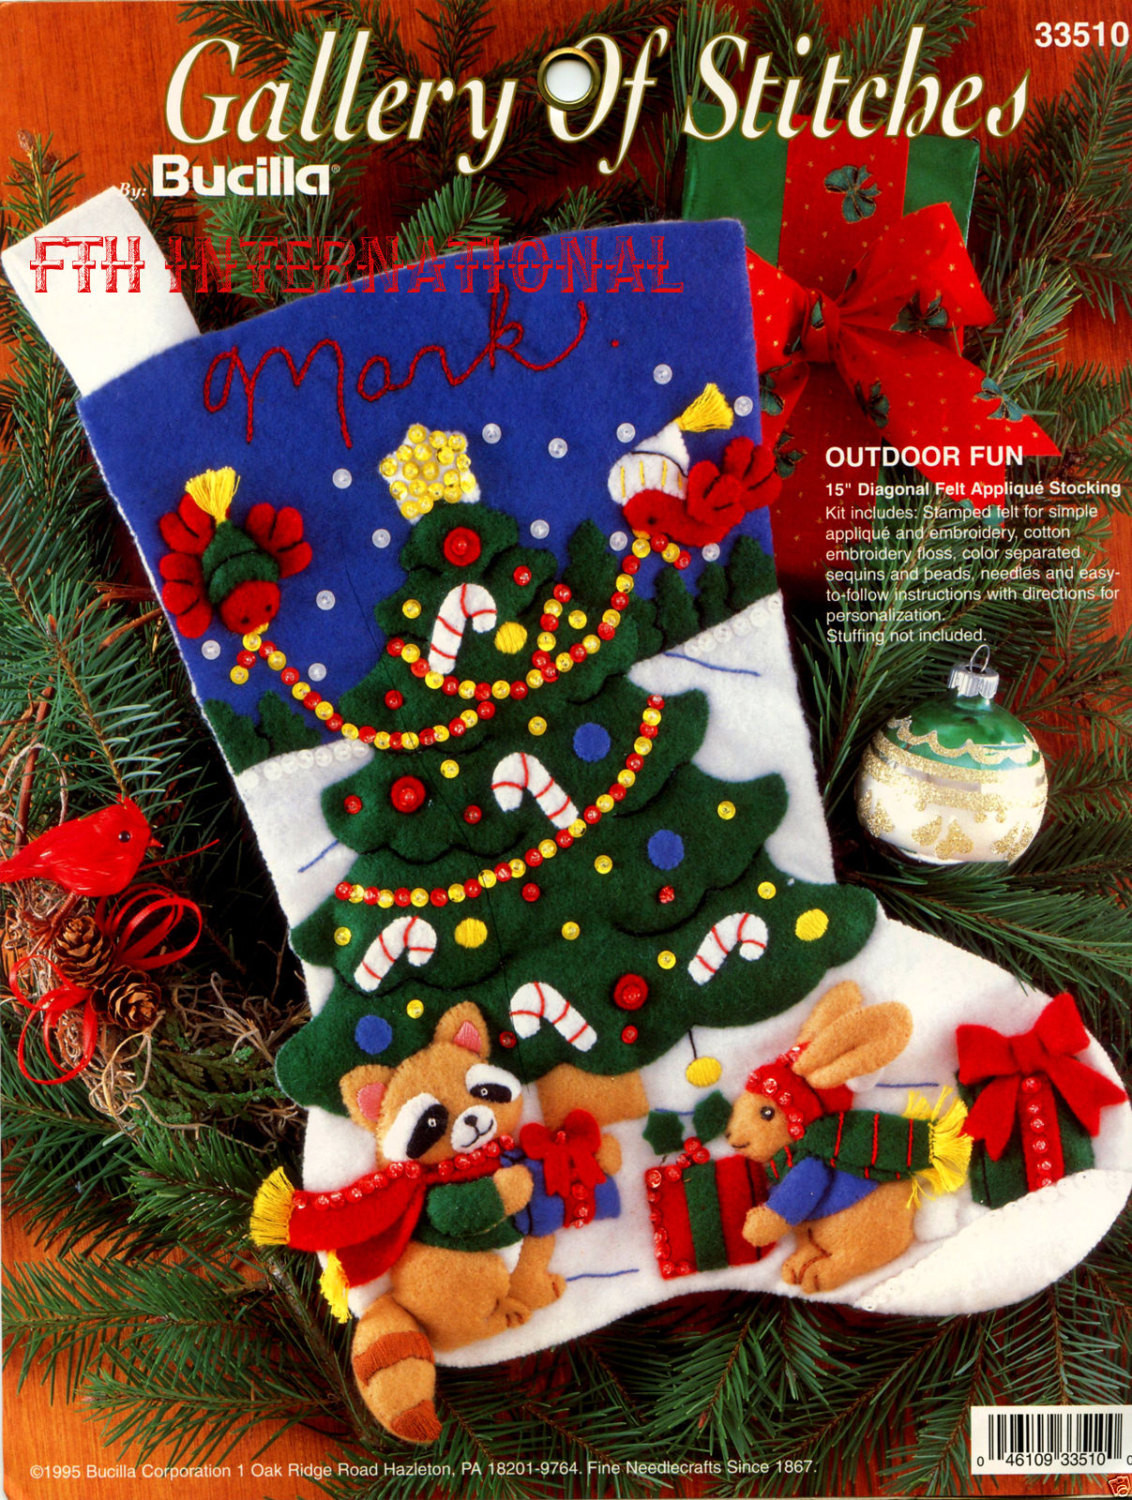 Best ideas about DIY Christmas Stocking Kit
. Save or Pin DIY Bucilla Outdoor Fun 15 Felt Christmas Stocking Kit Now.